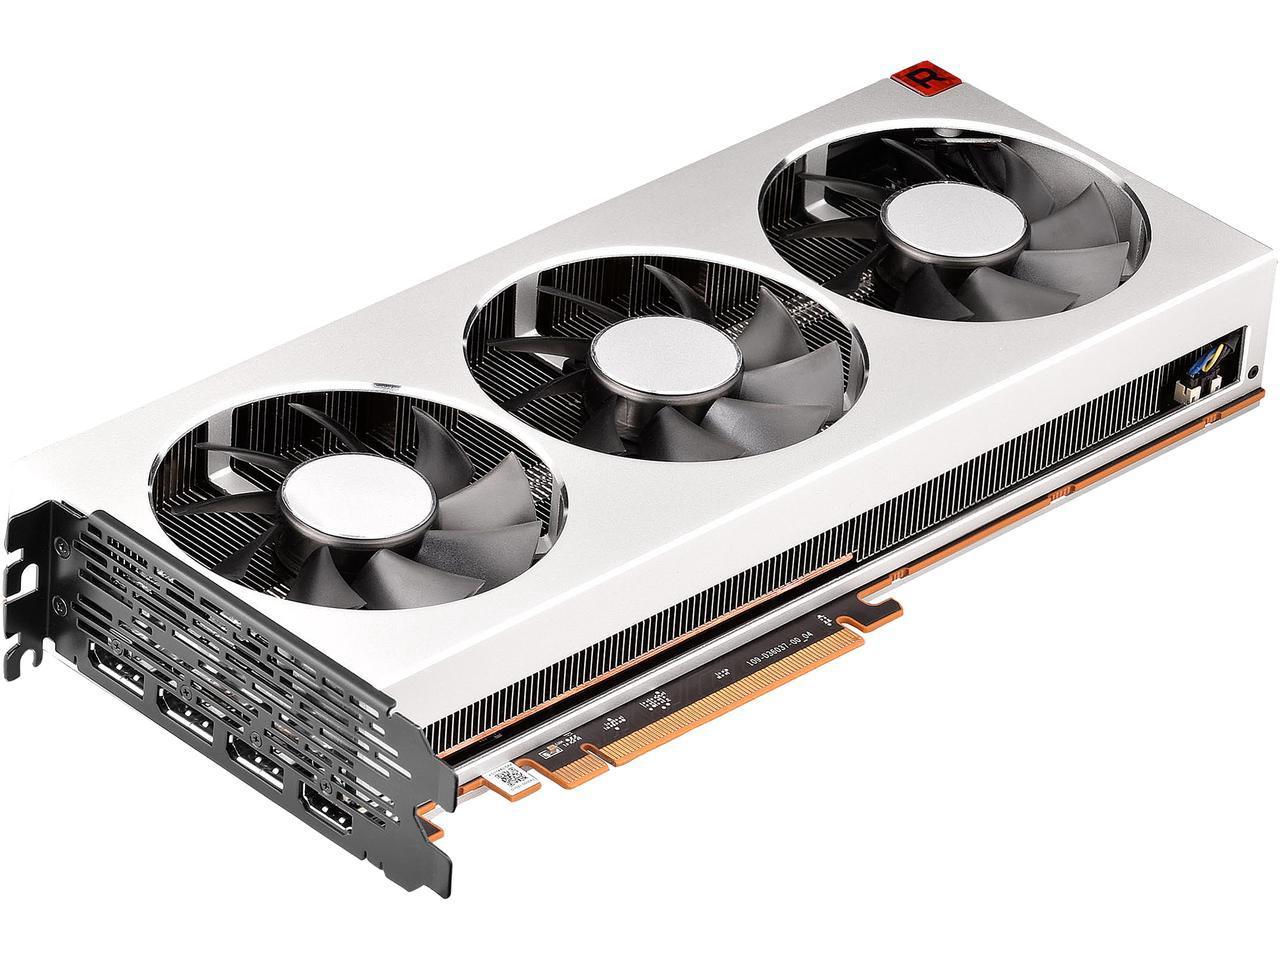 AMD Radeon VII product image